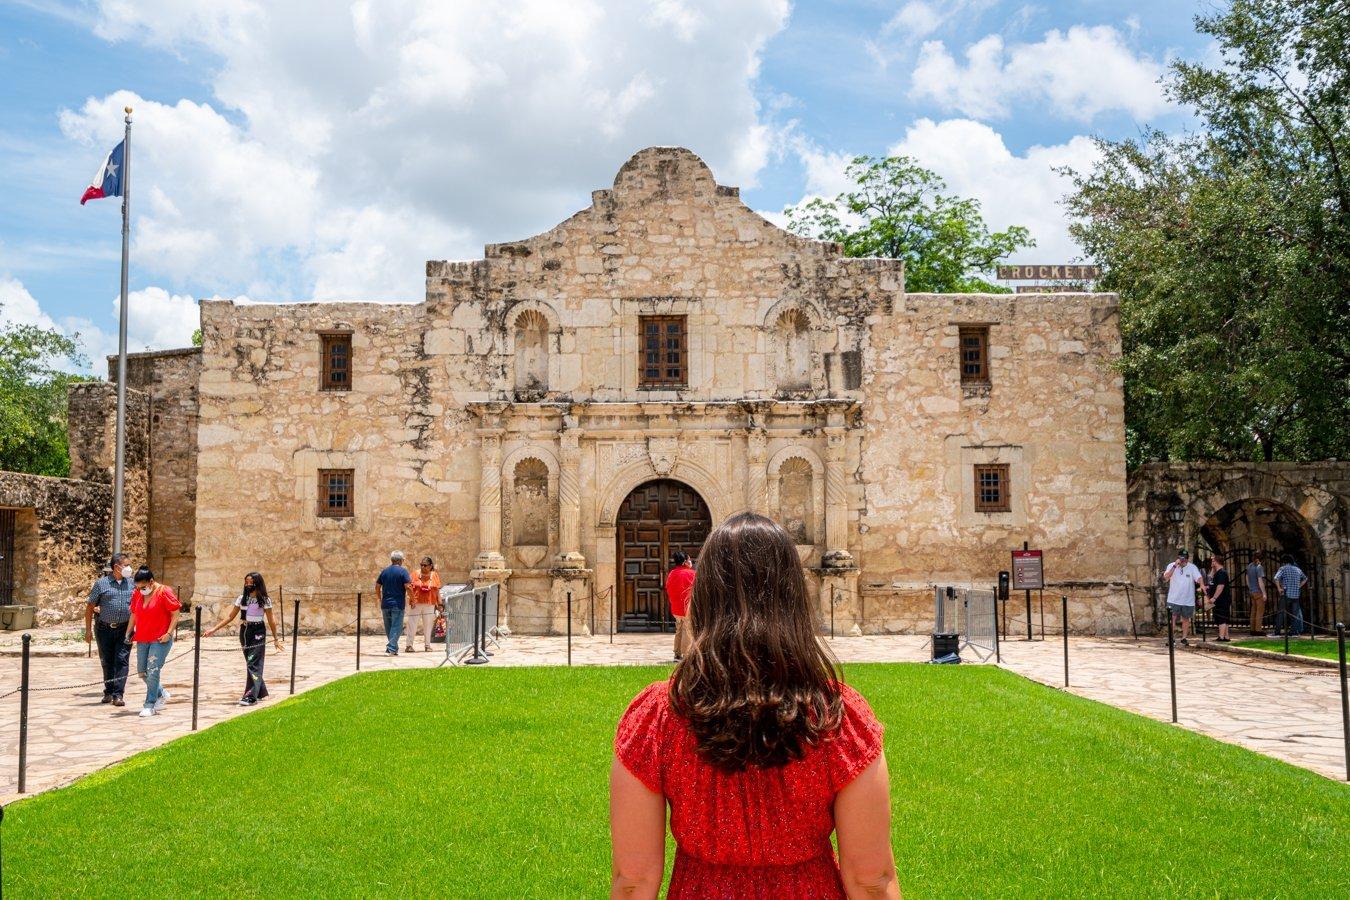 Visit the Alamo